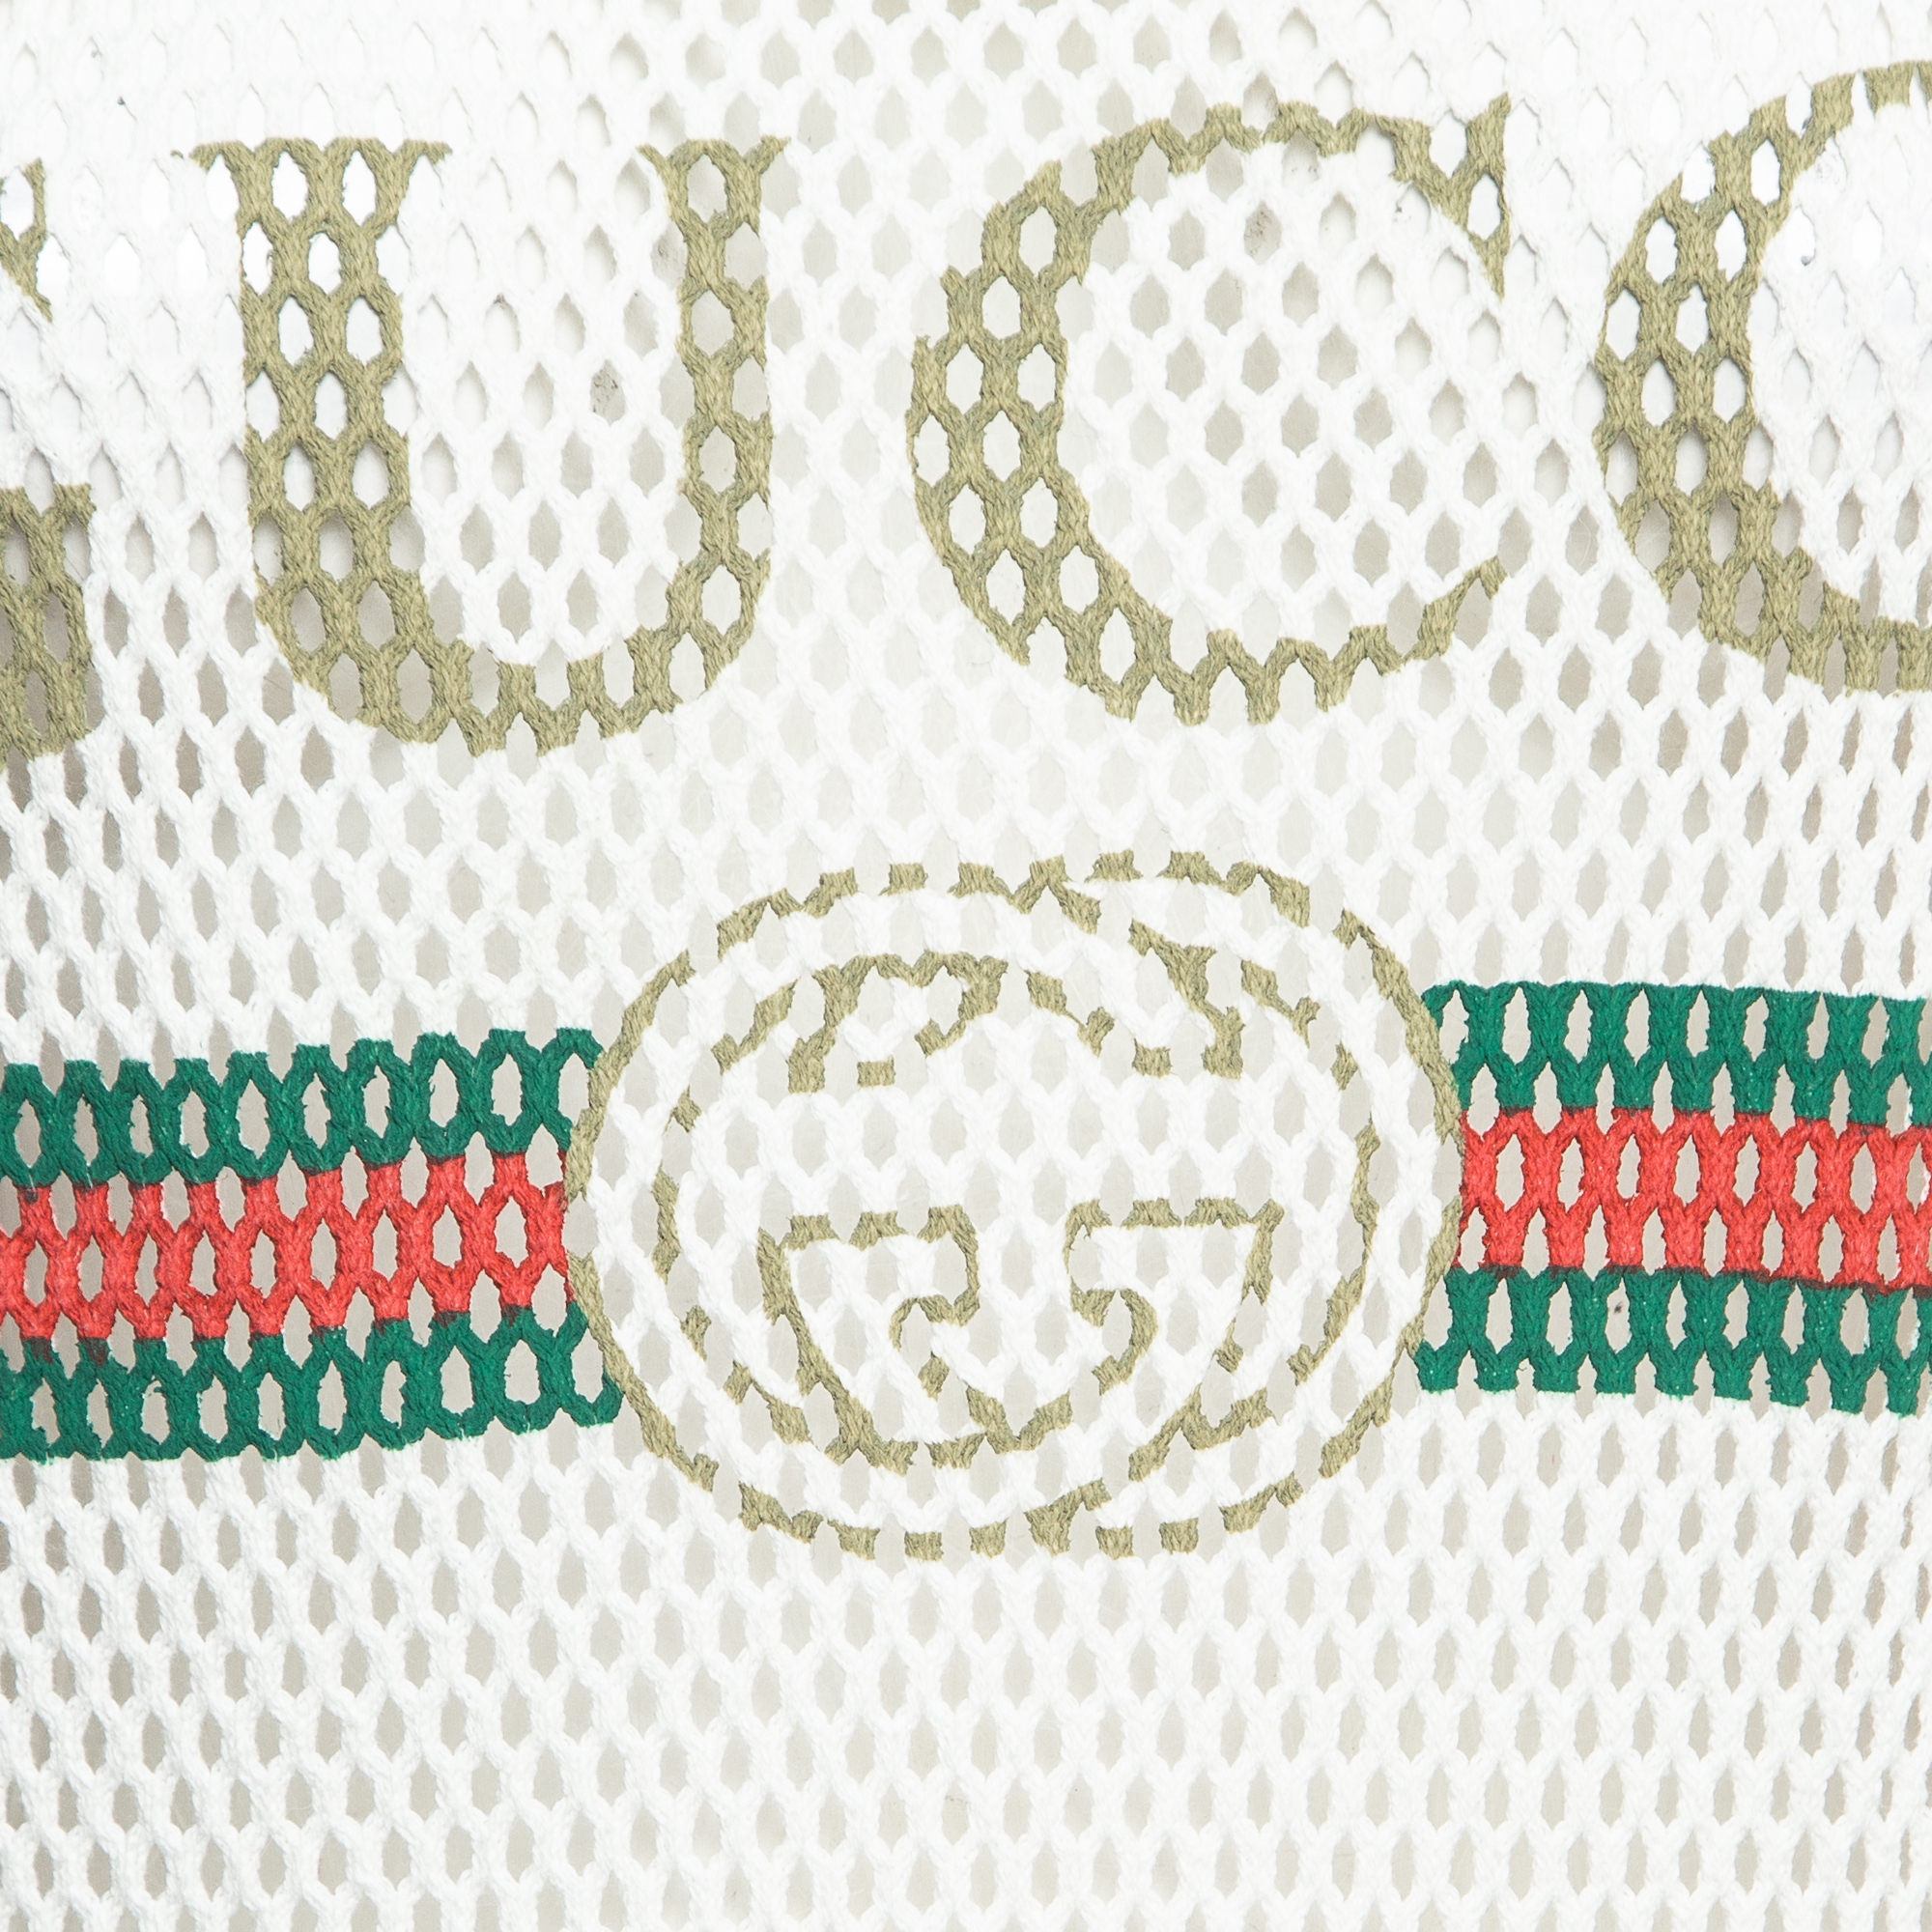 Gucci White Logo Patterned Knit Tank Top S